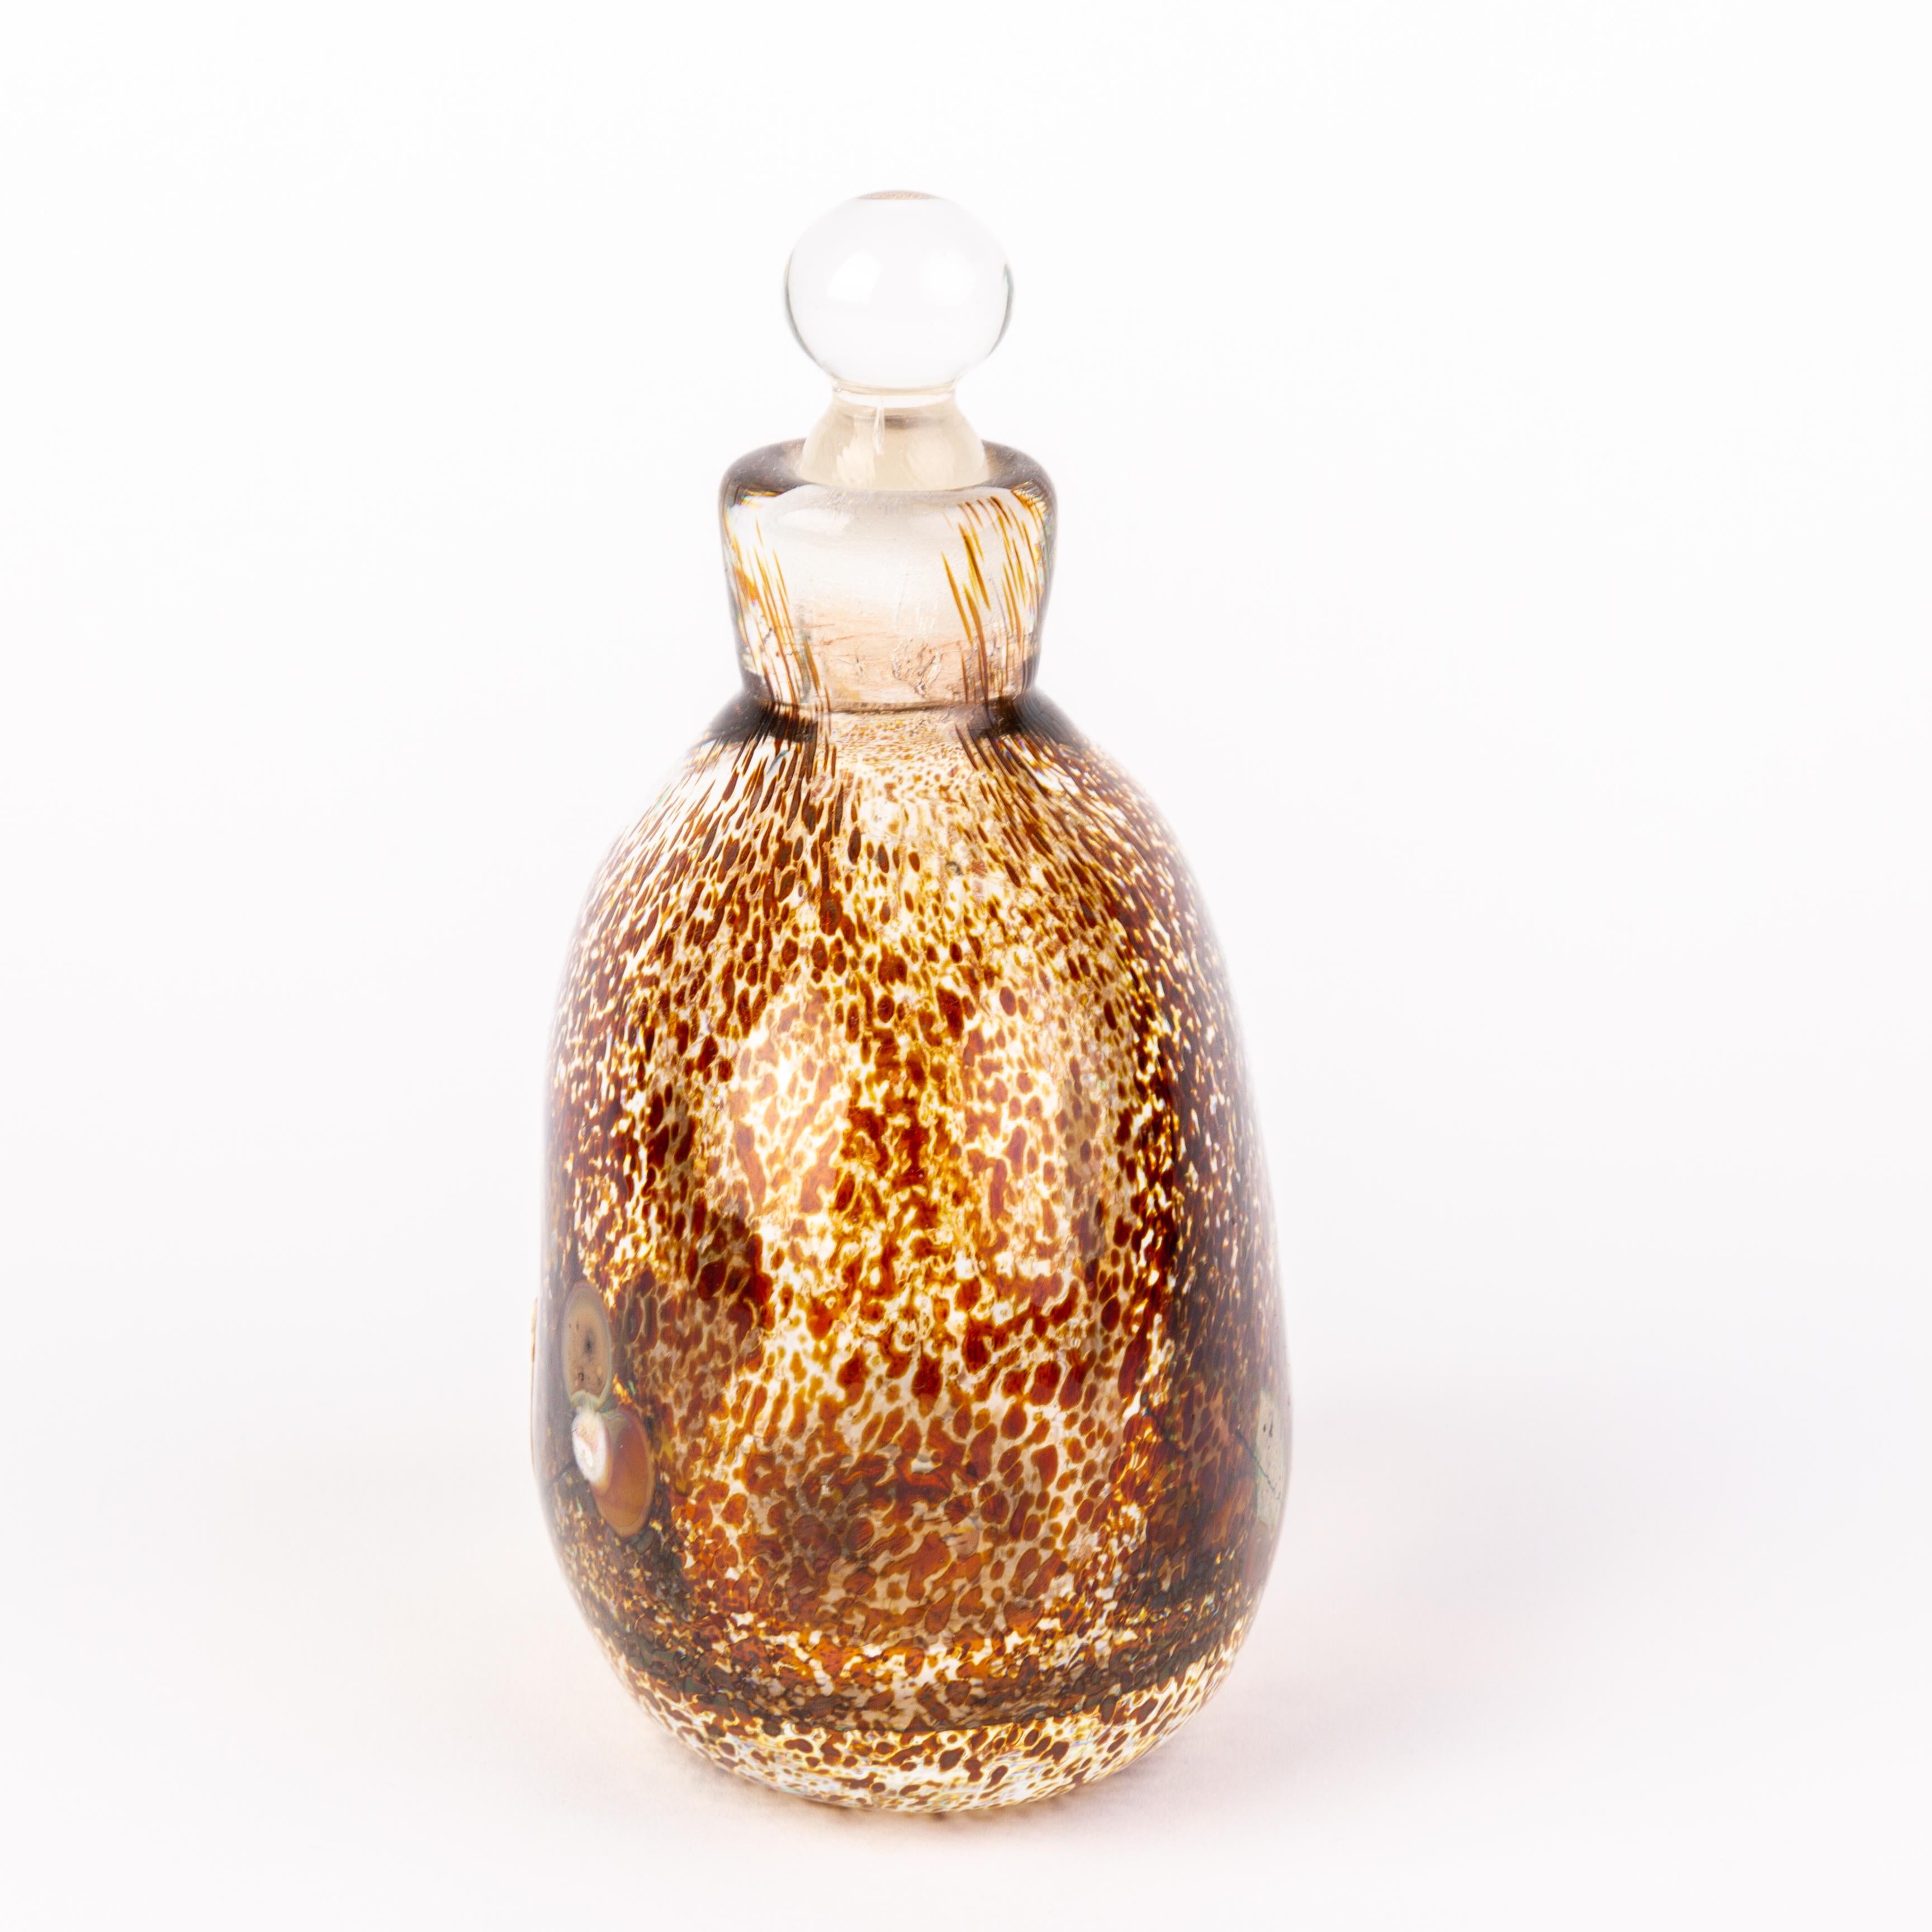 Ex Gallery Exhibition Splatter Glass Perfume Bottle
Good condition
Free international shipping.